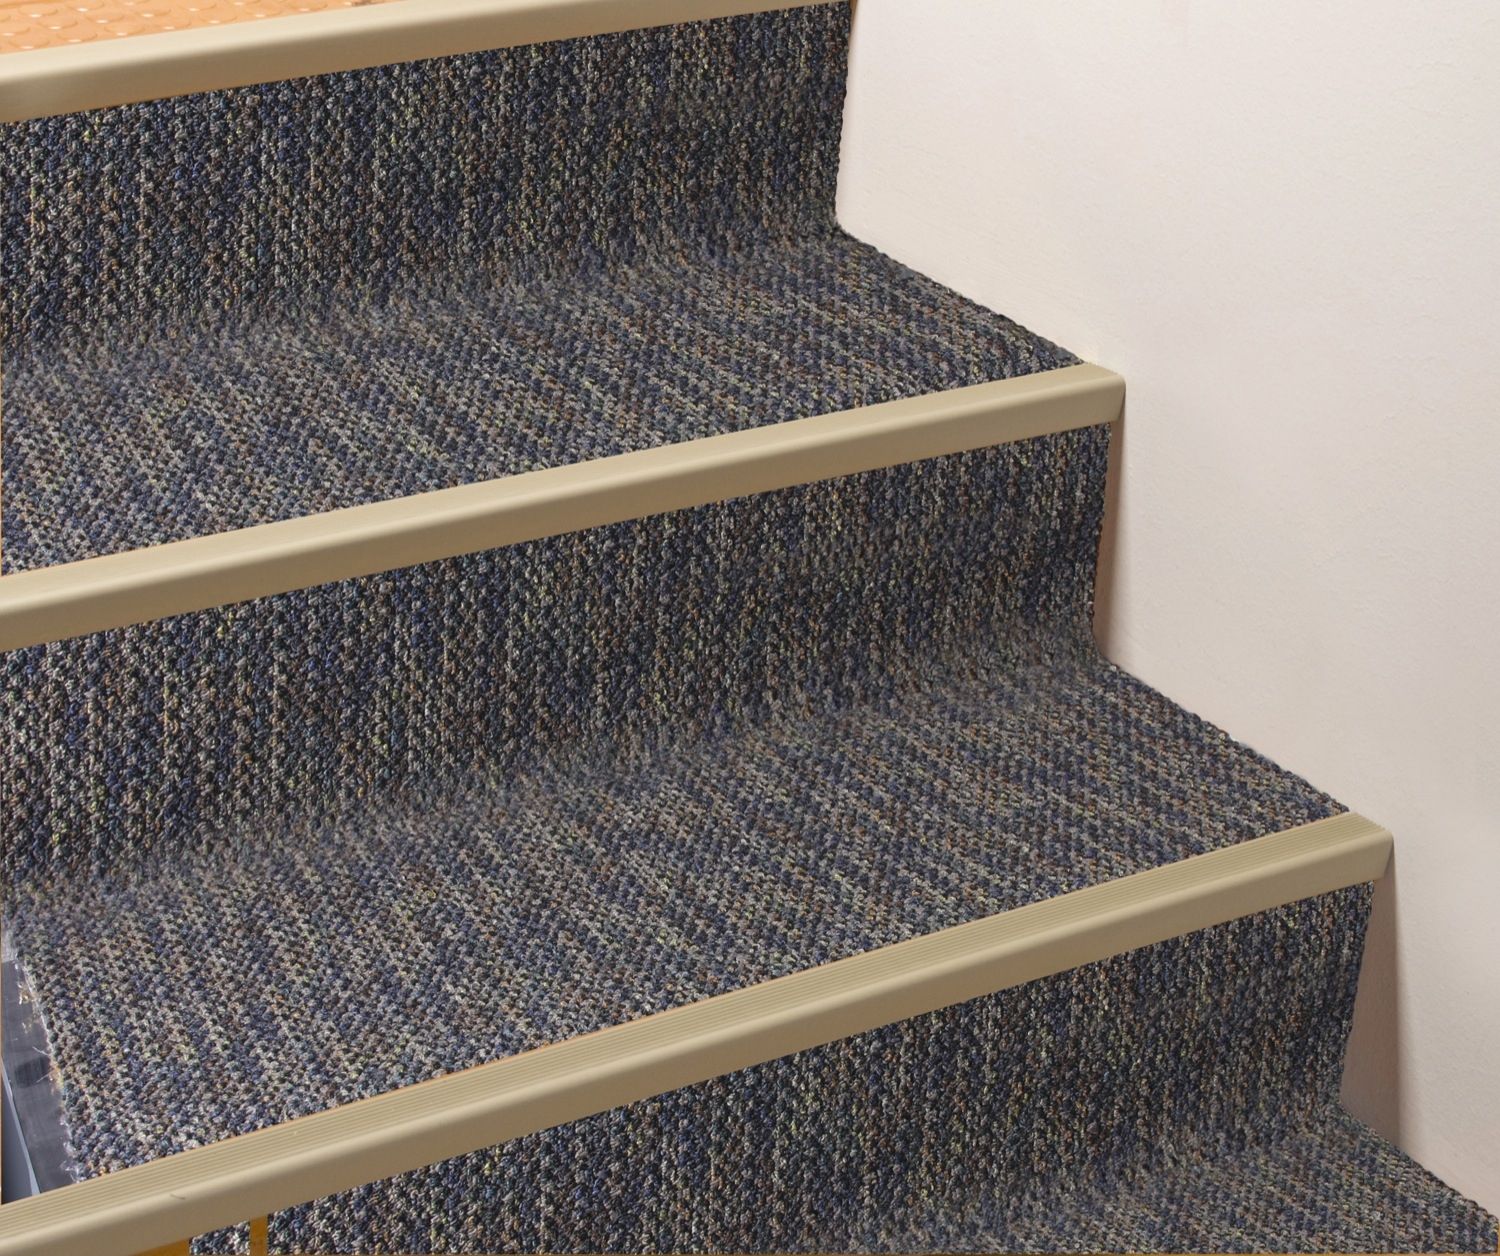 Flexco Rubber Flooring Vinyl Flooring Vinyl Accessories Samples Within Stair Tread Carpet Tiles (View 9 of 20)